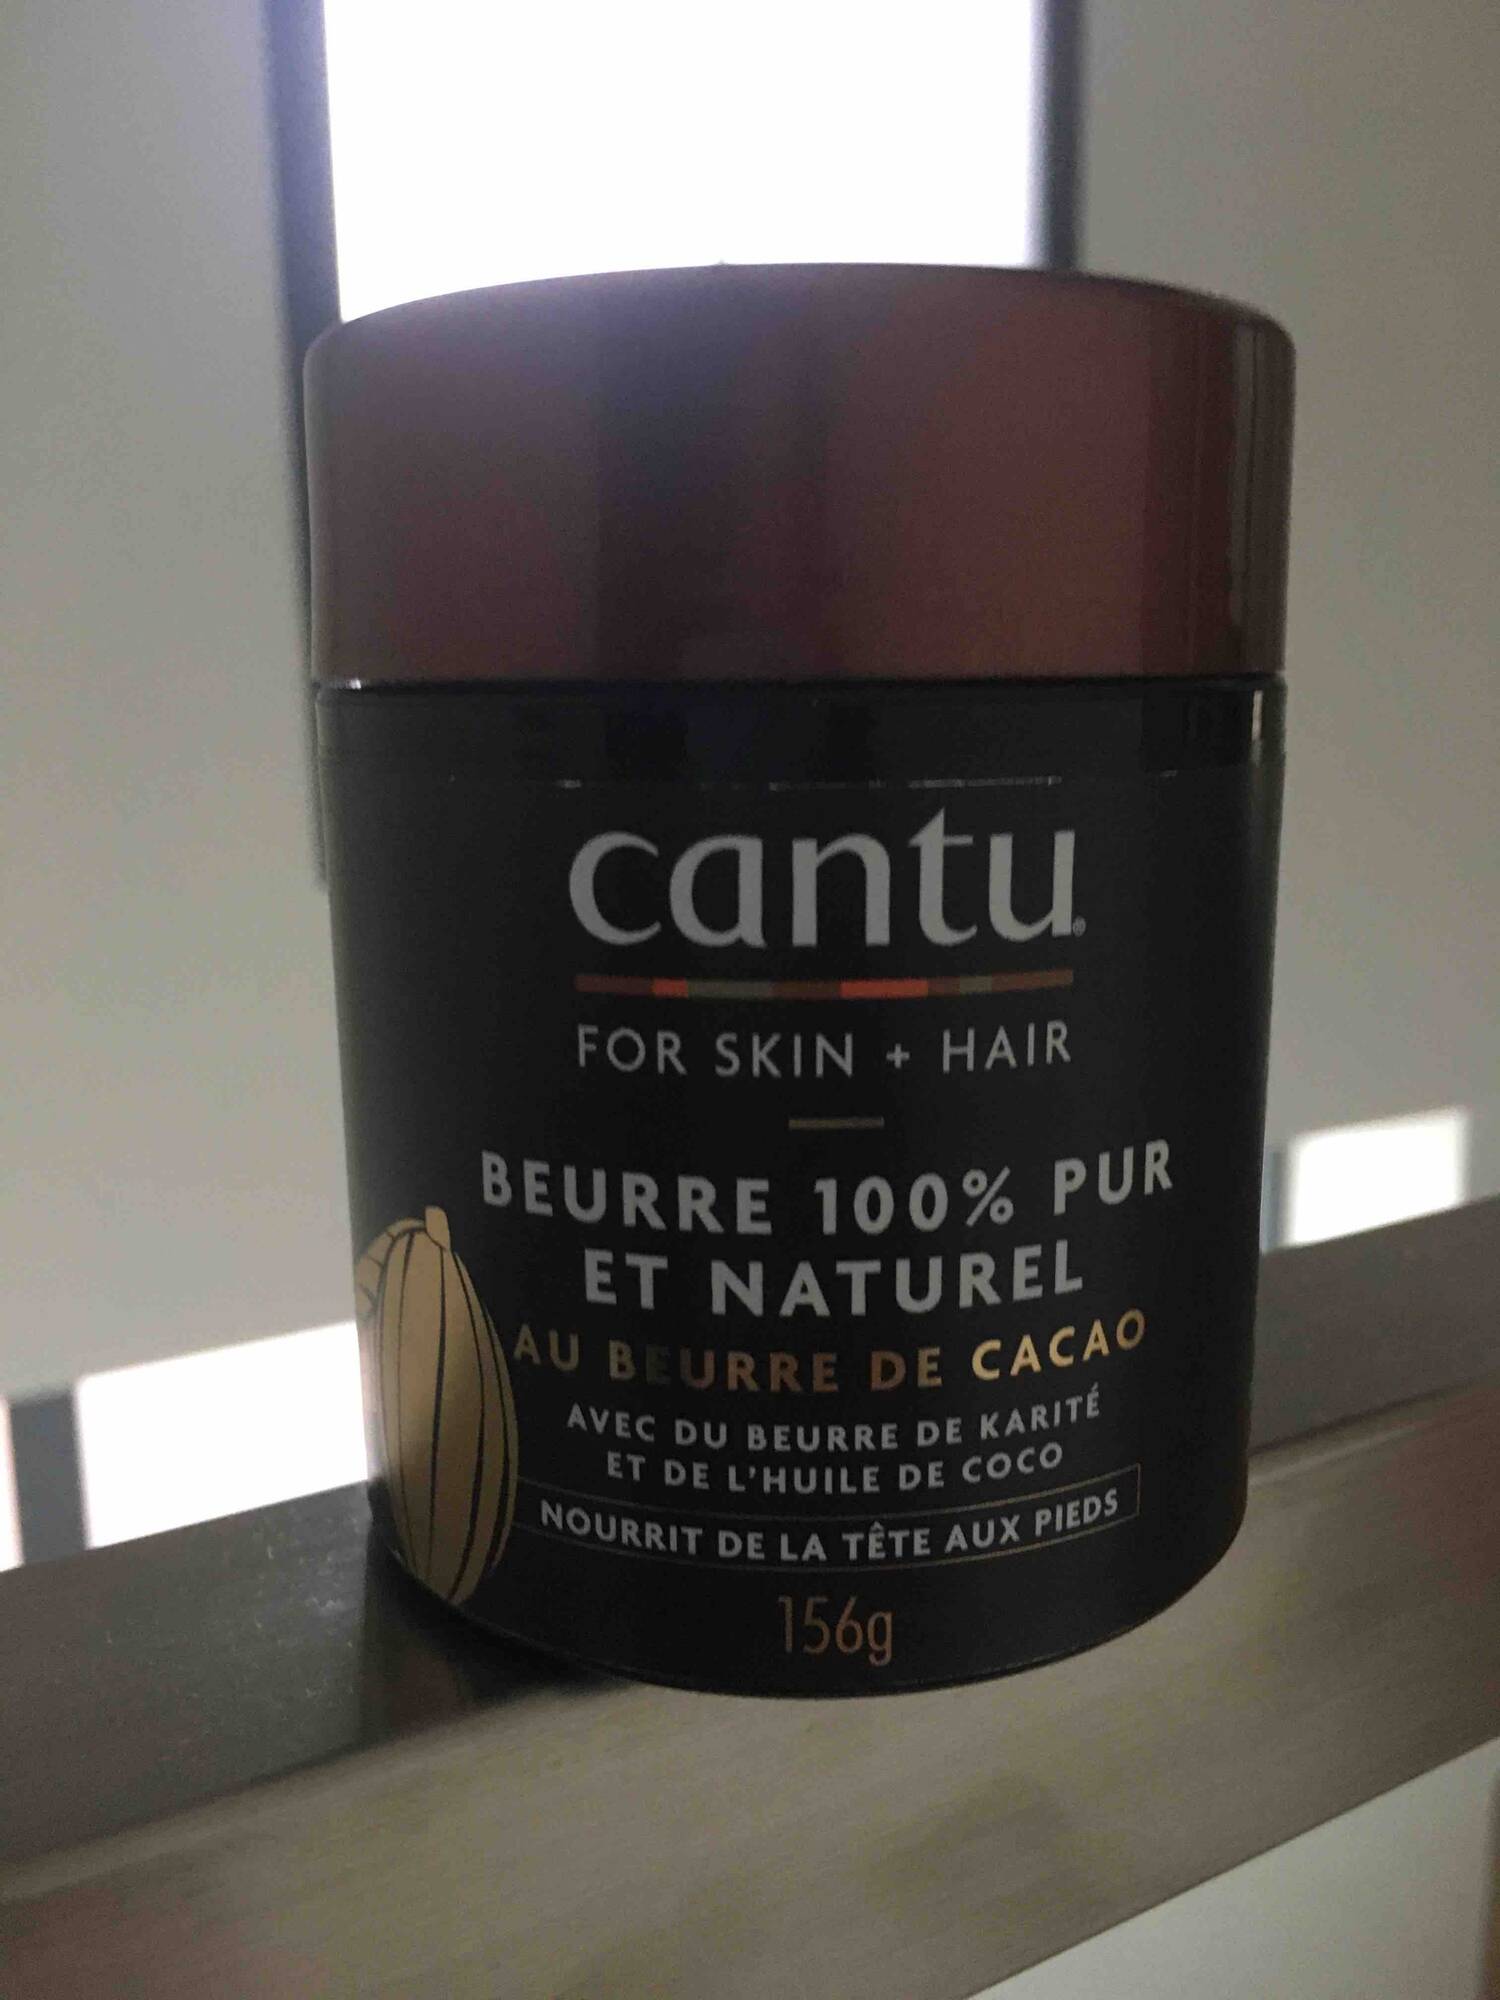 CANTU - For skin + hair - Beurre 100 % pur et naturel